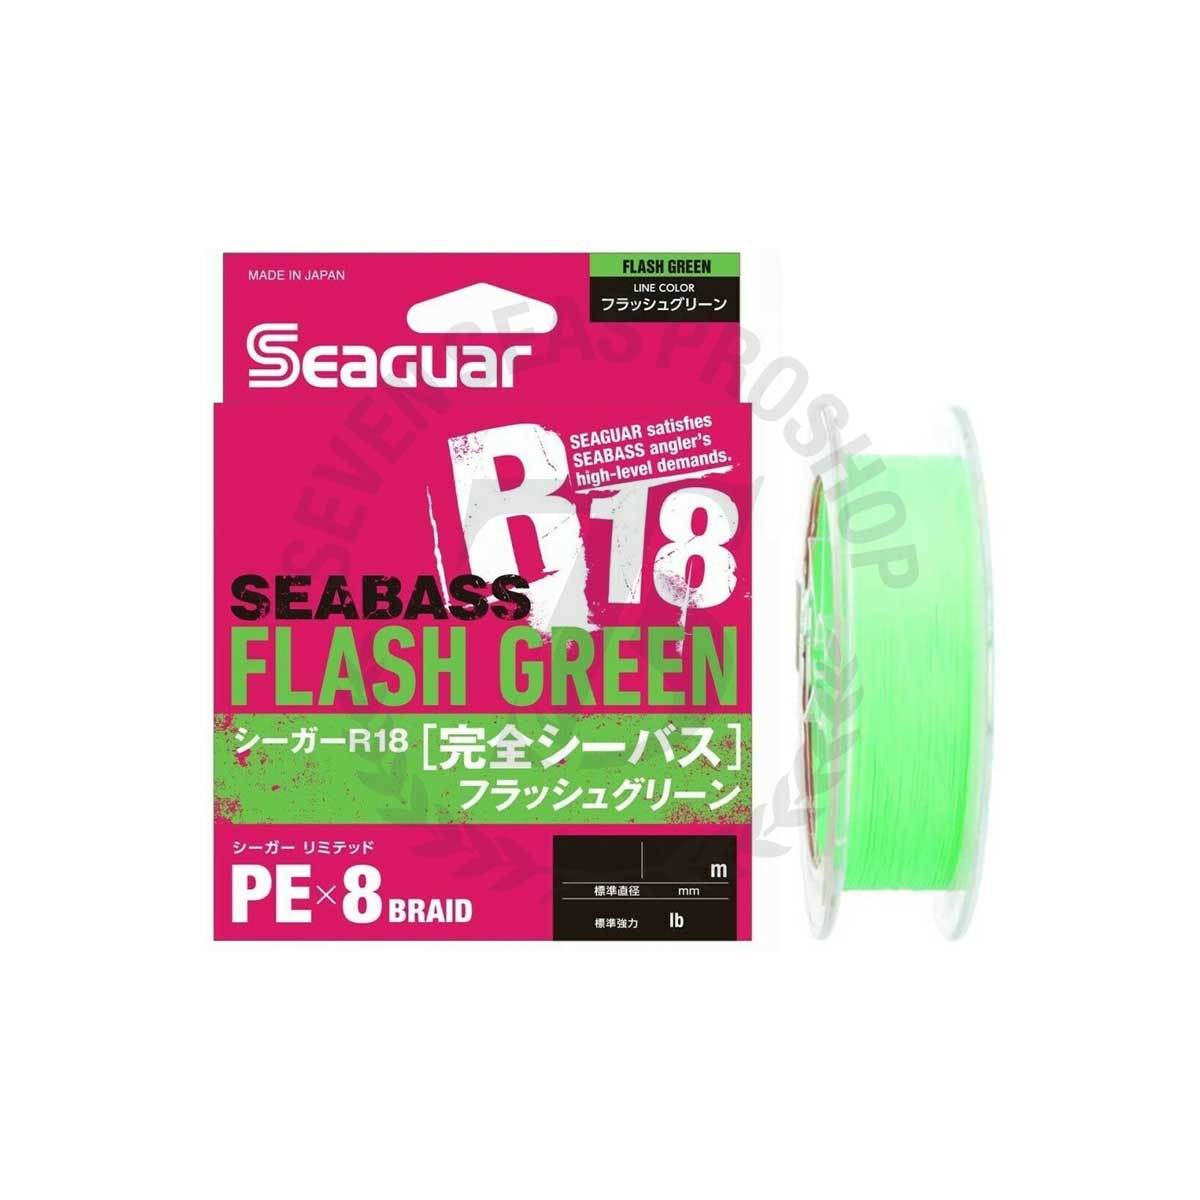 Seaguar R18 Seabass Flash Green PE X8 Braid 150m #PE-1.2 (Flash